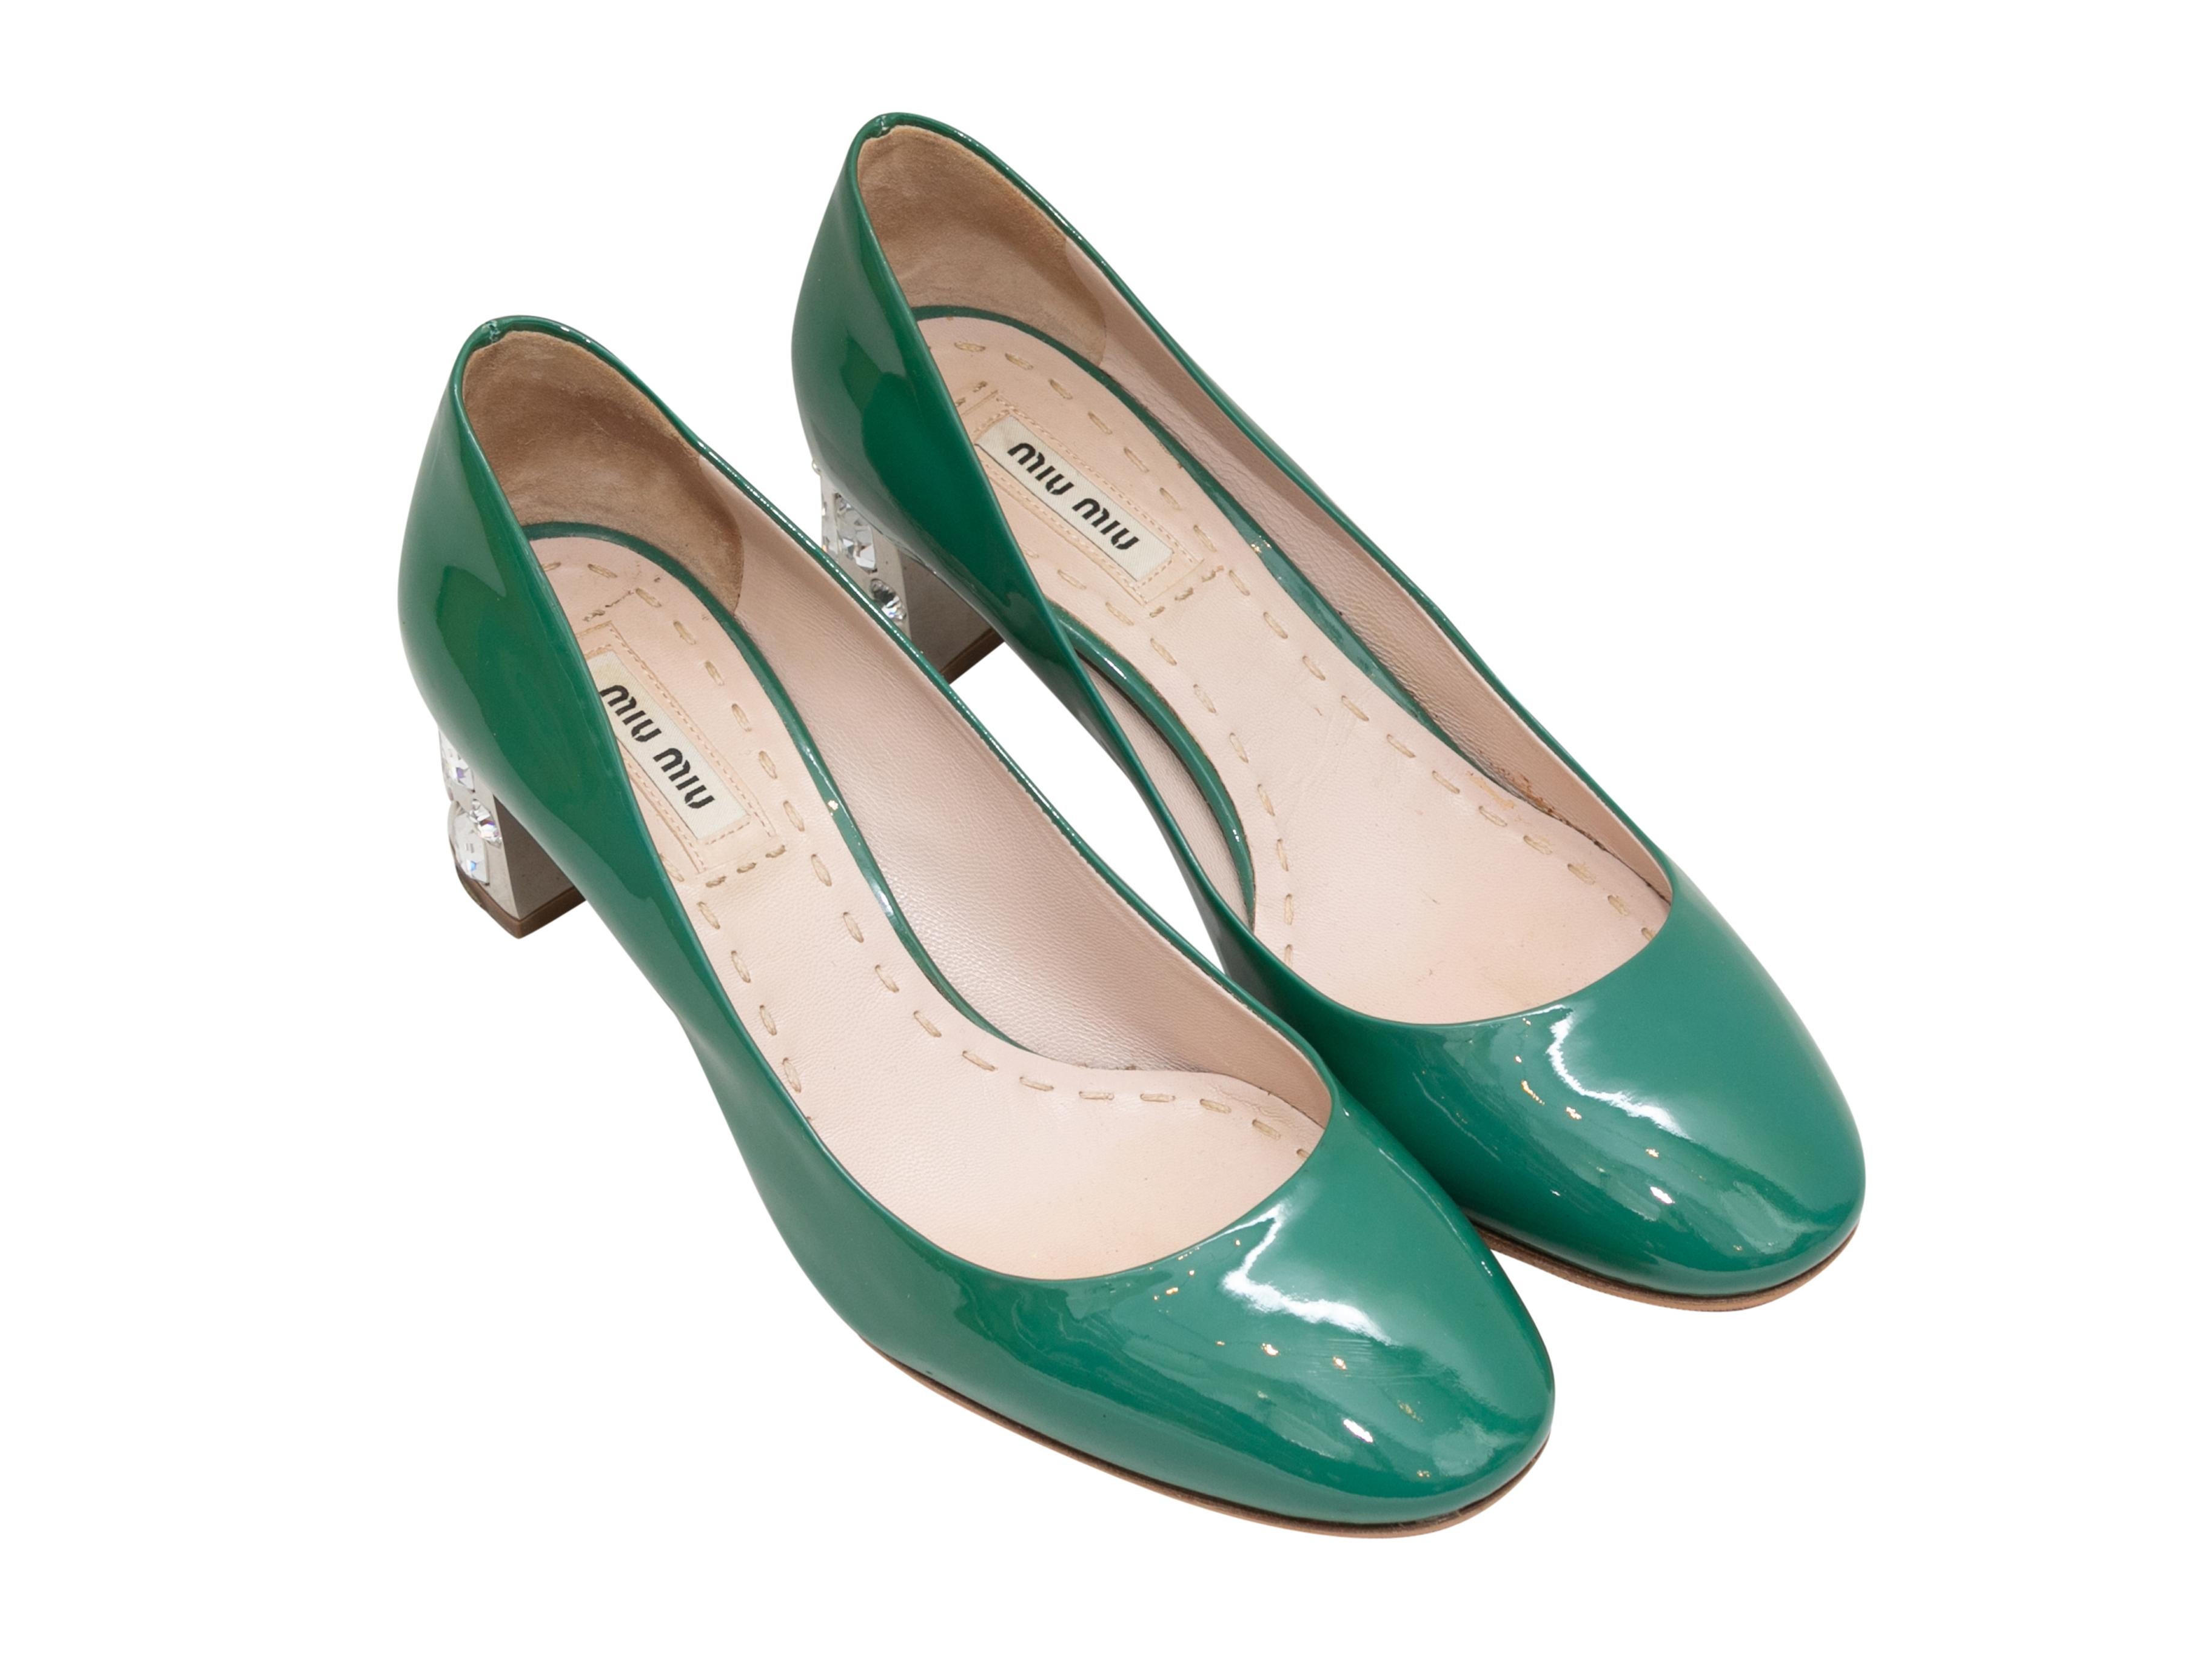 Green patent leather pumps by Miu Miu. Crystal-embellished block heels. 1.75